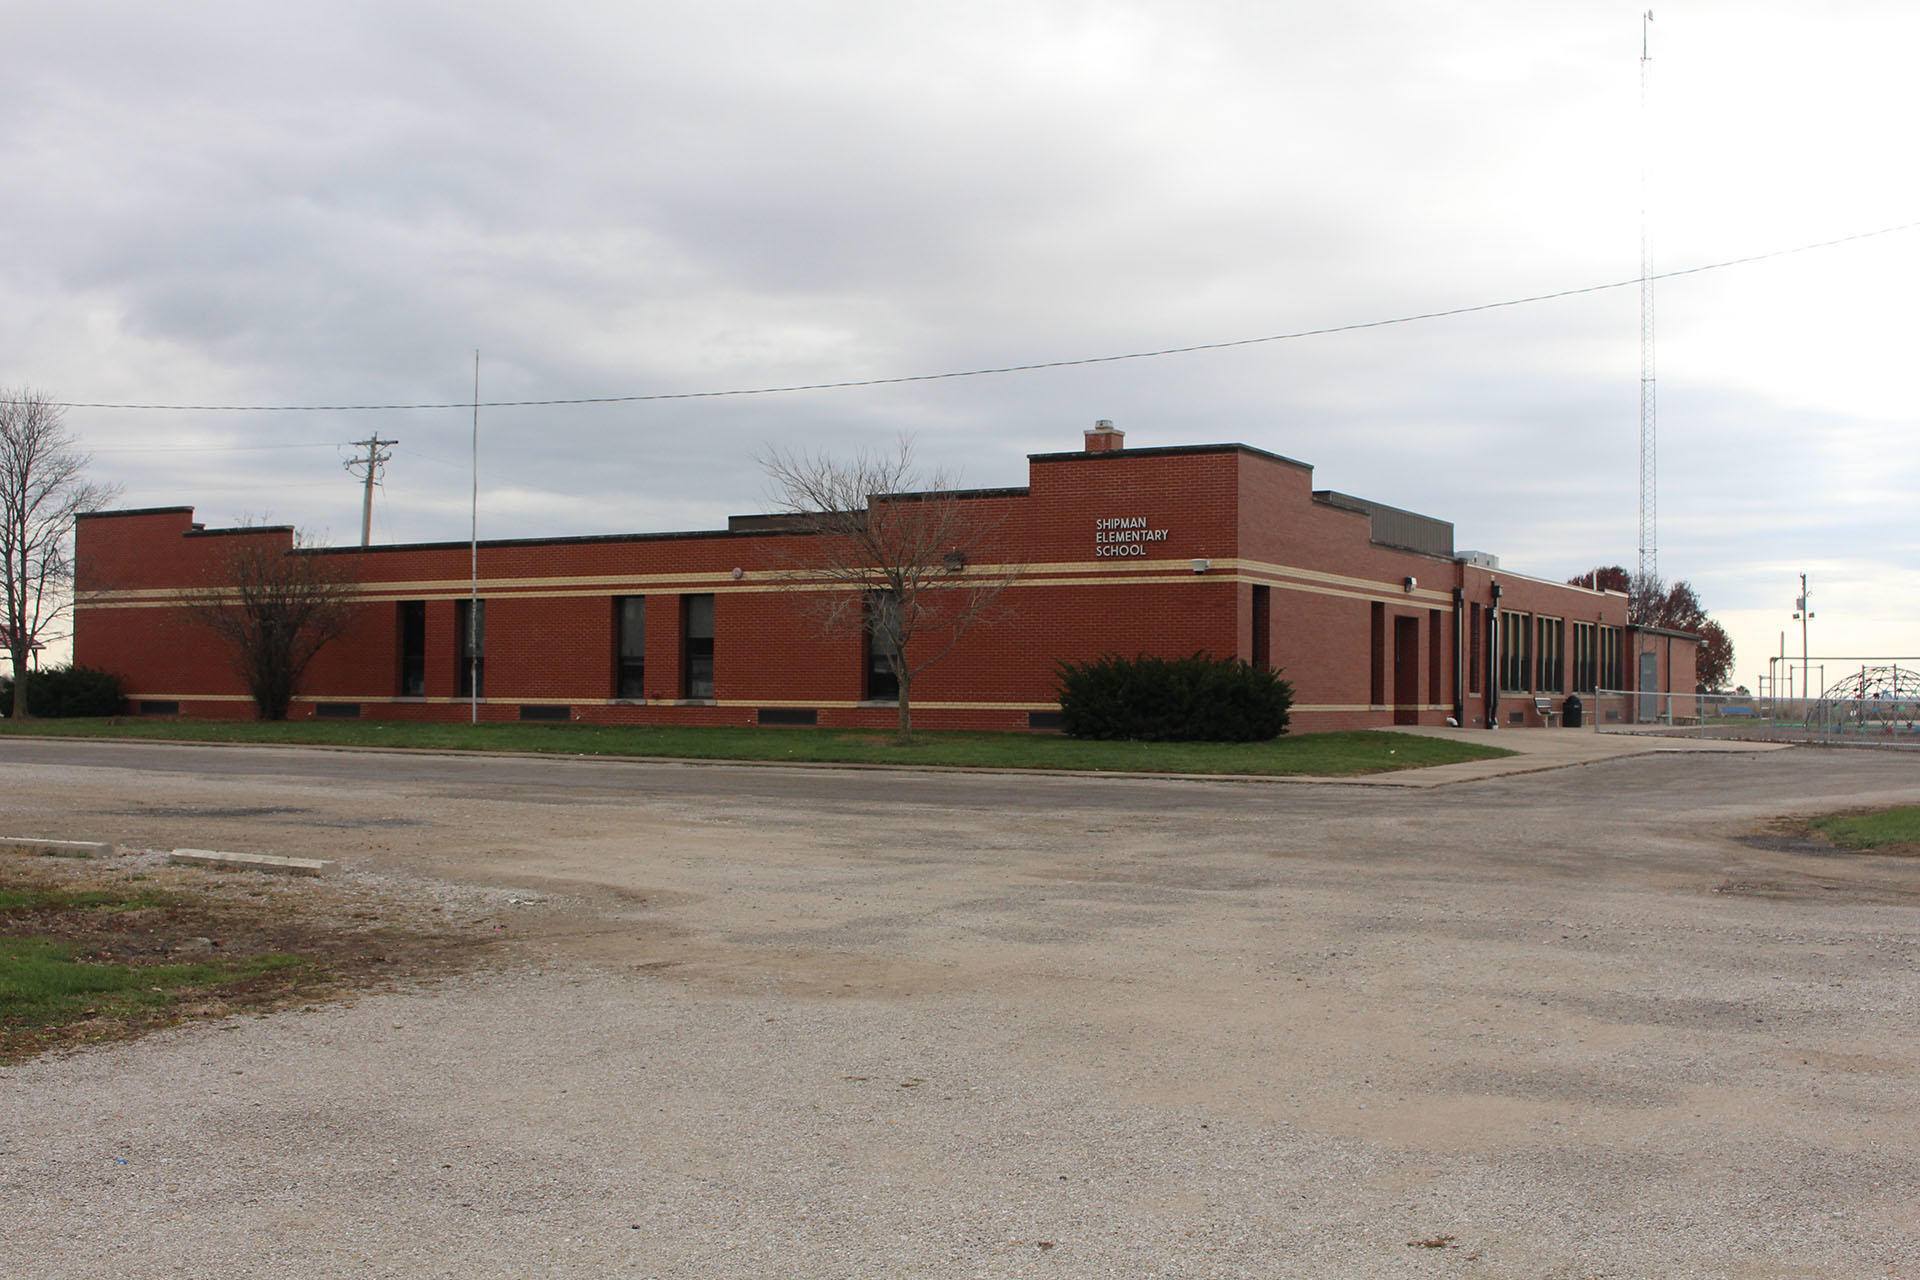 Picture of Shipman Elementary School